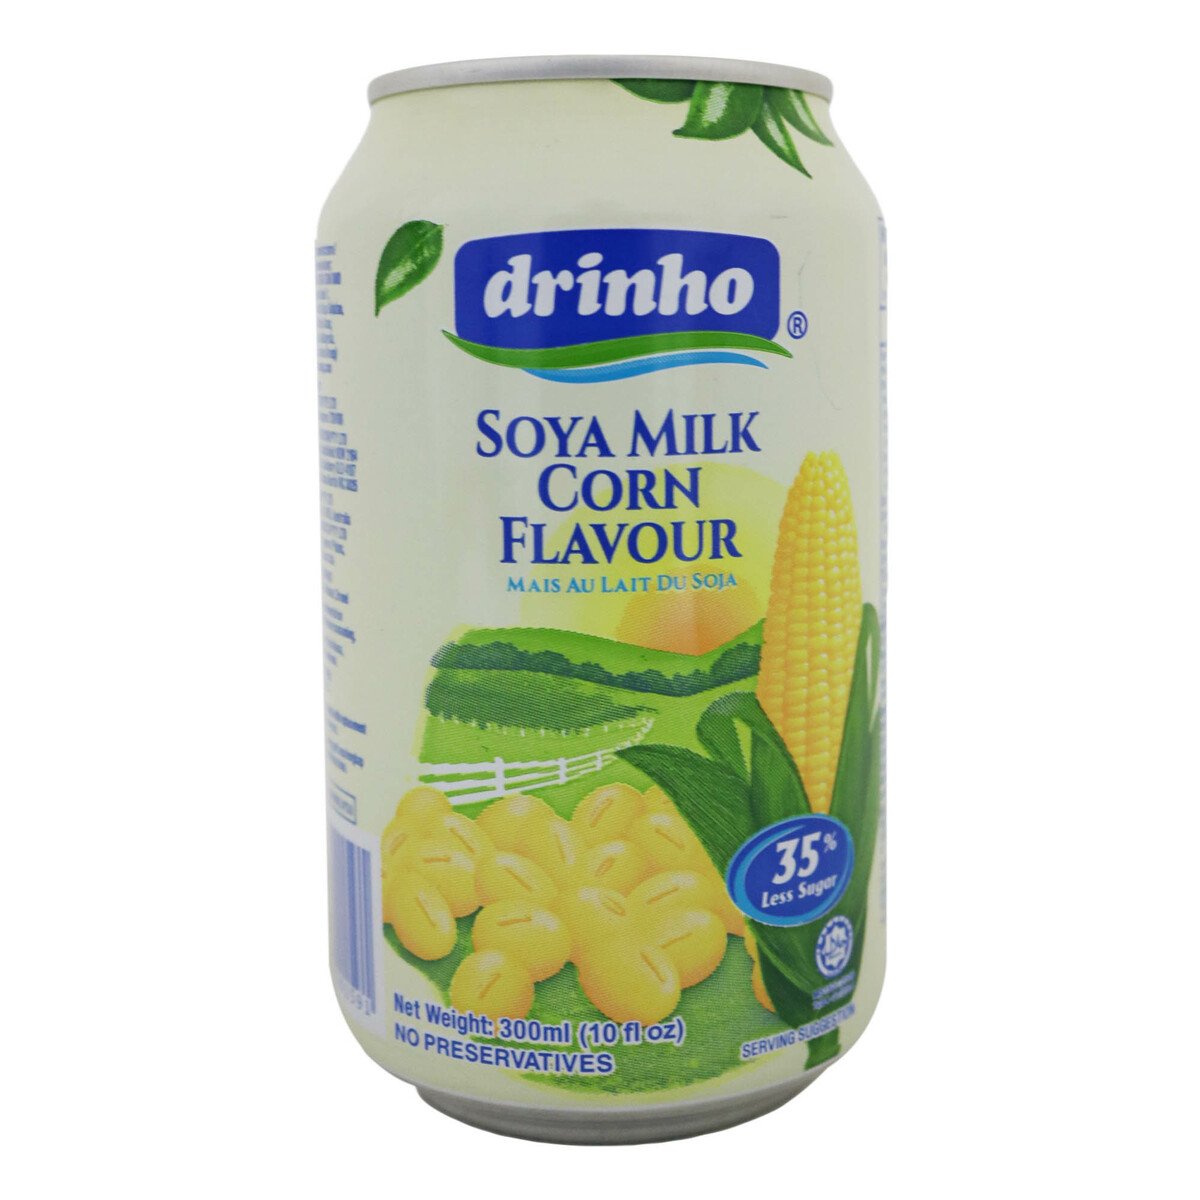 Drinho Corn Soya Milk 300ml